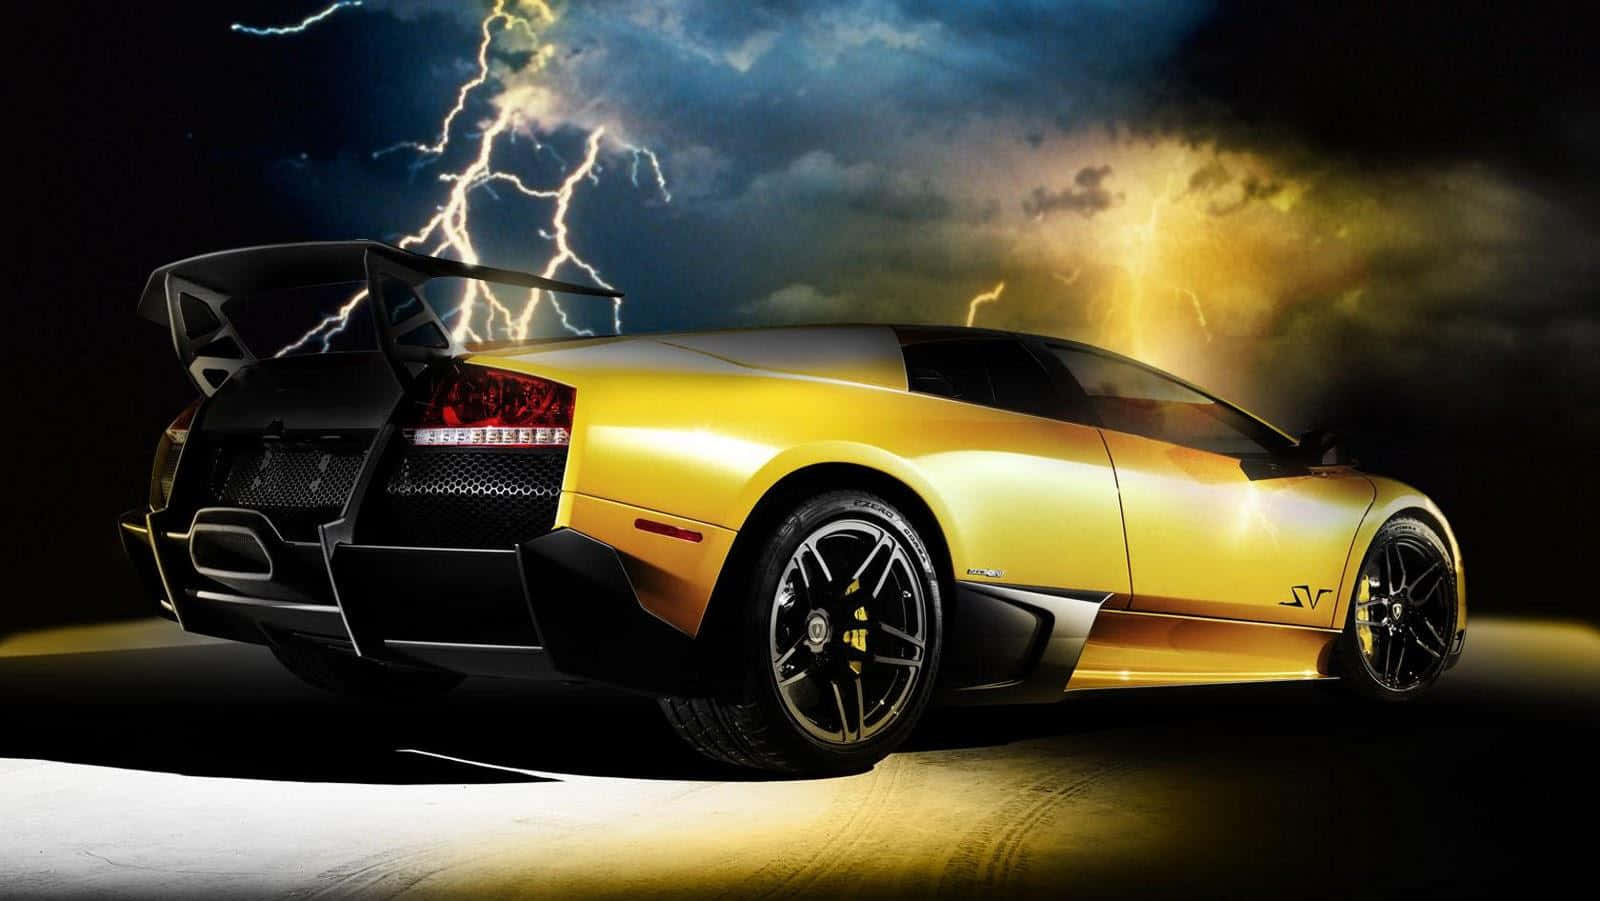 Stunning Lamborghini Murciélago in Motion Wallpaper